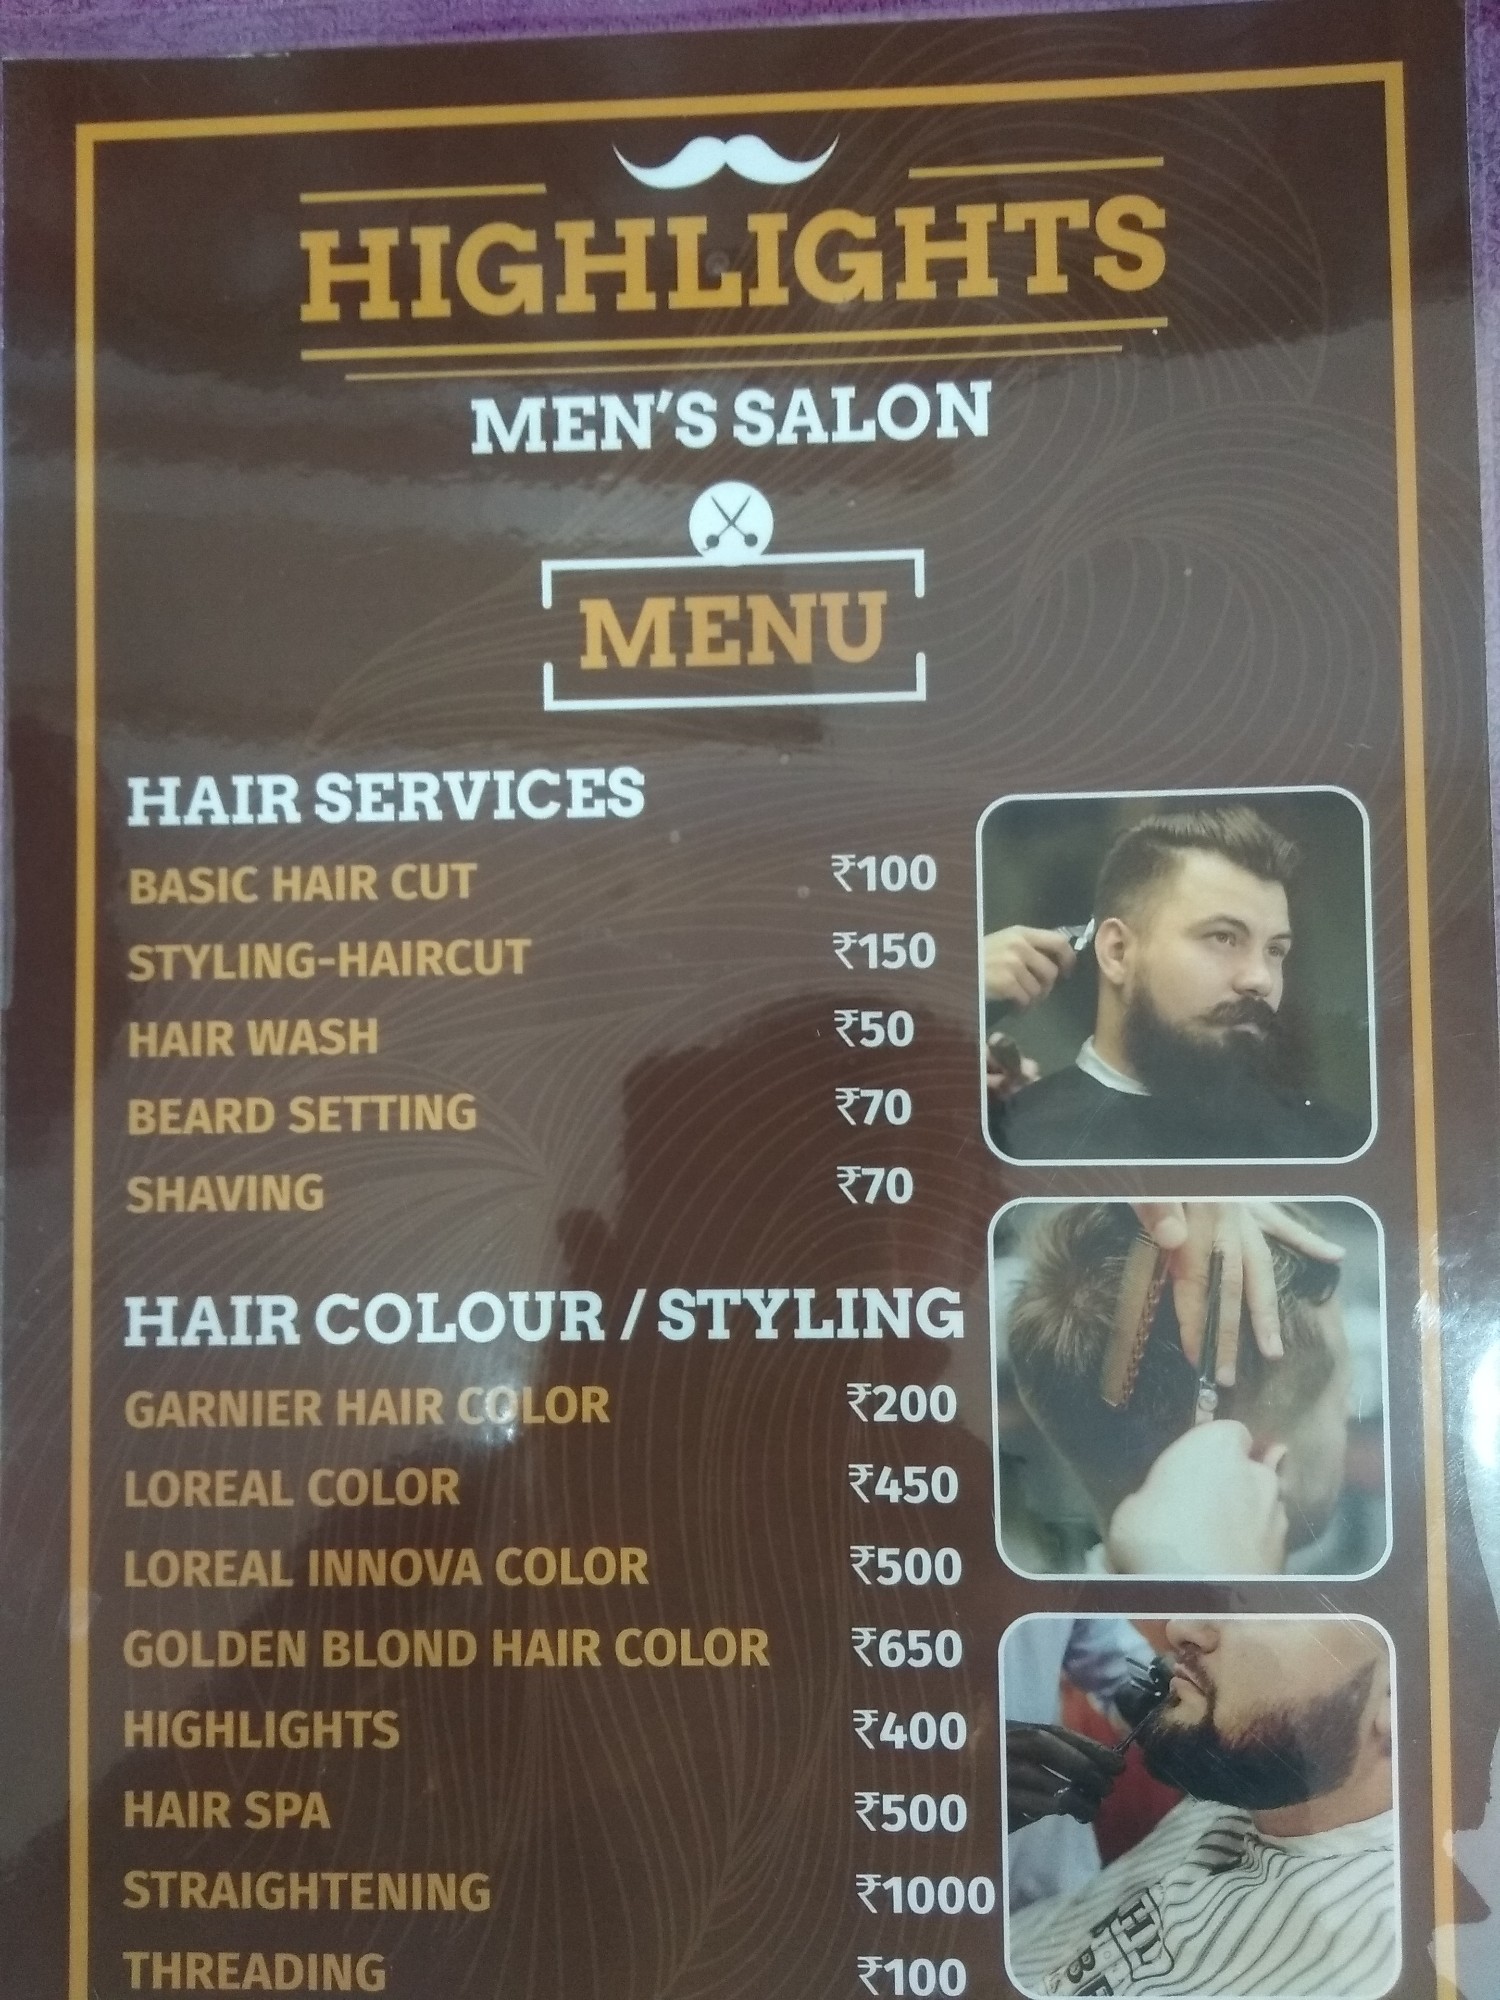 Highlights Men's Salon in Rajaji Nagar, Bangalore-560010 | Sulekha Bangalore